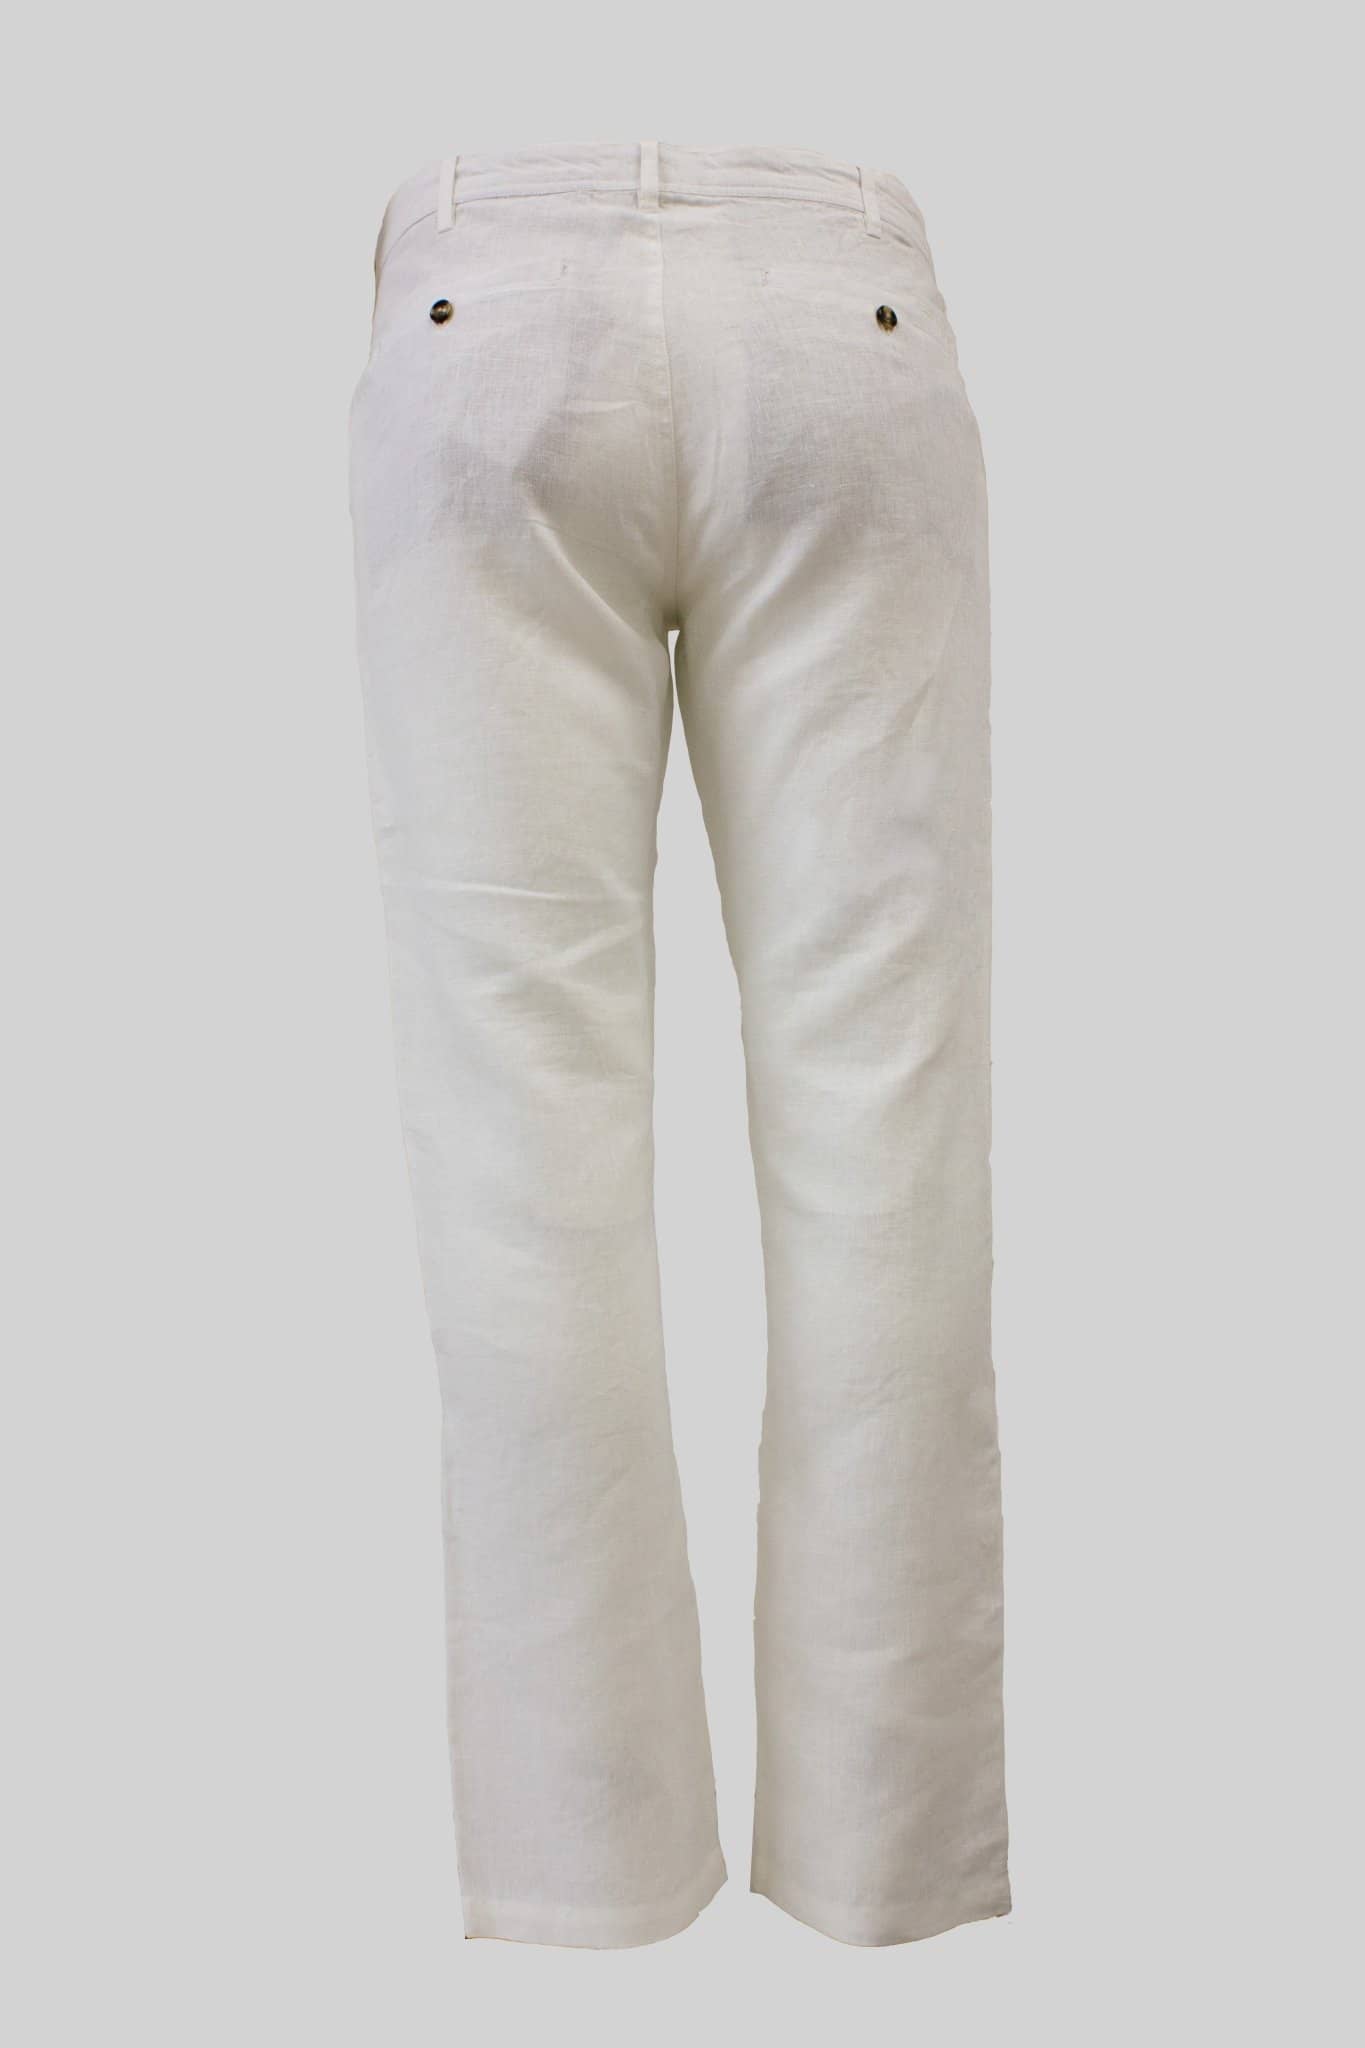 Pantalon blanc en lin pour homme coupe chino (vue de dos)